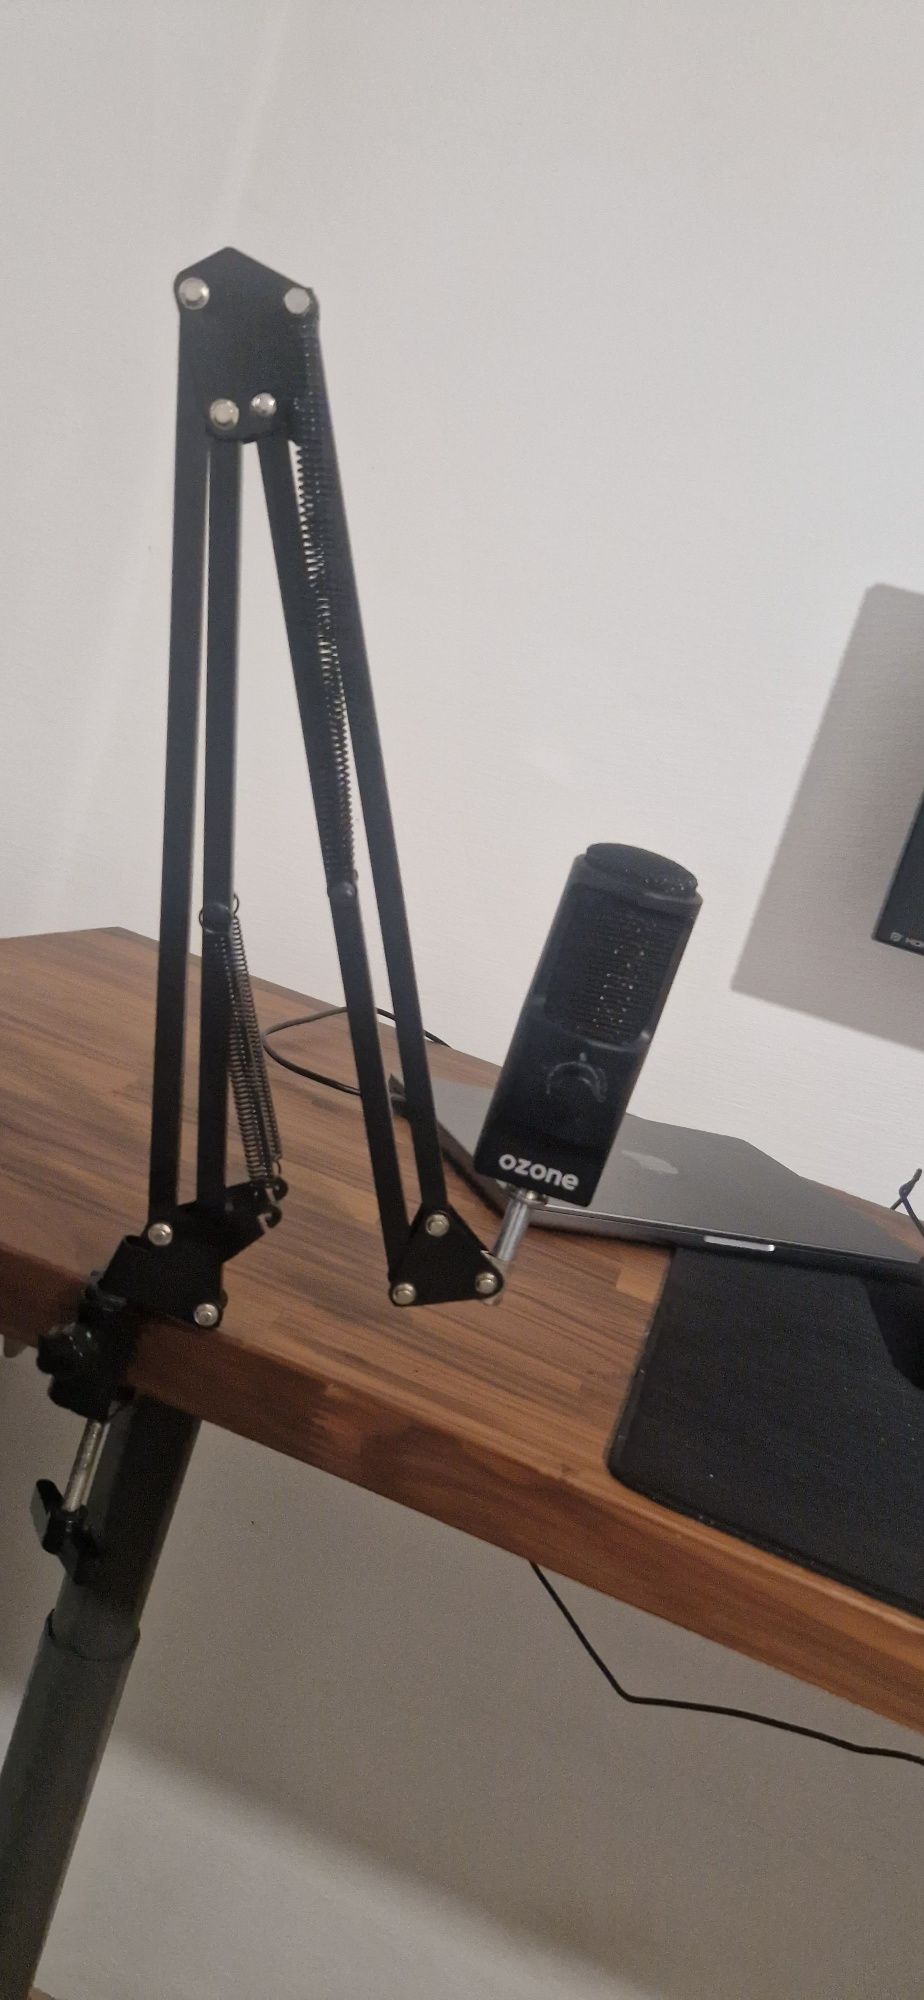 Microfone ozone rec x50 com suporte de mesa